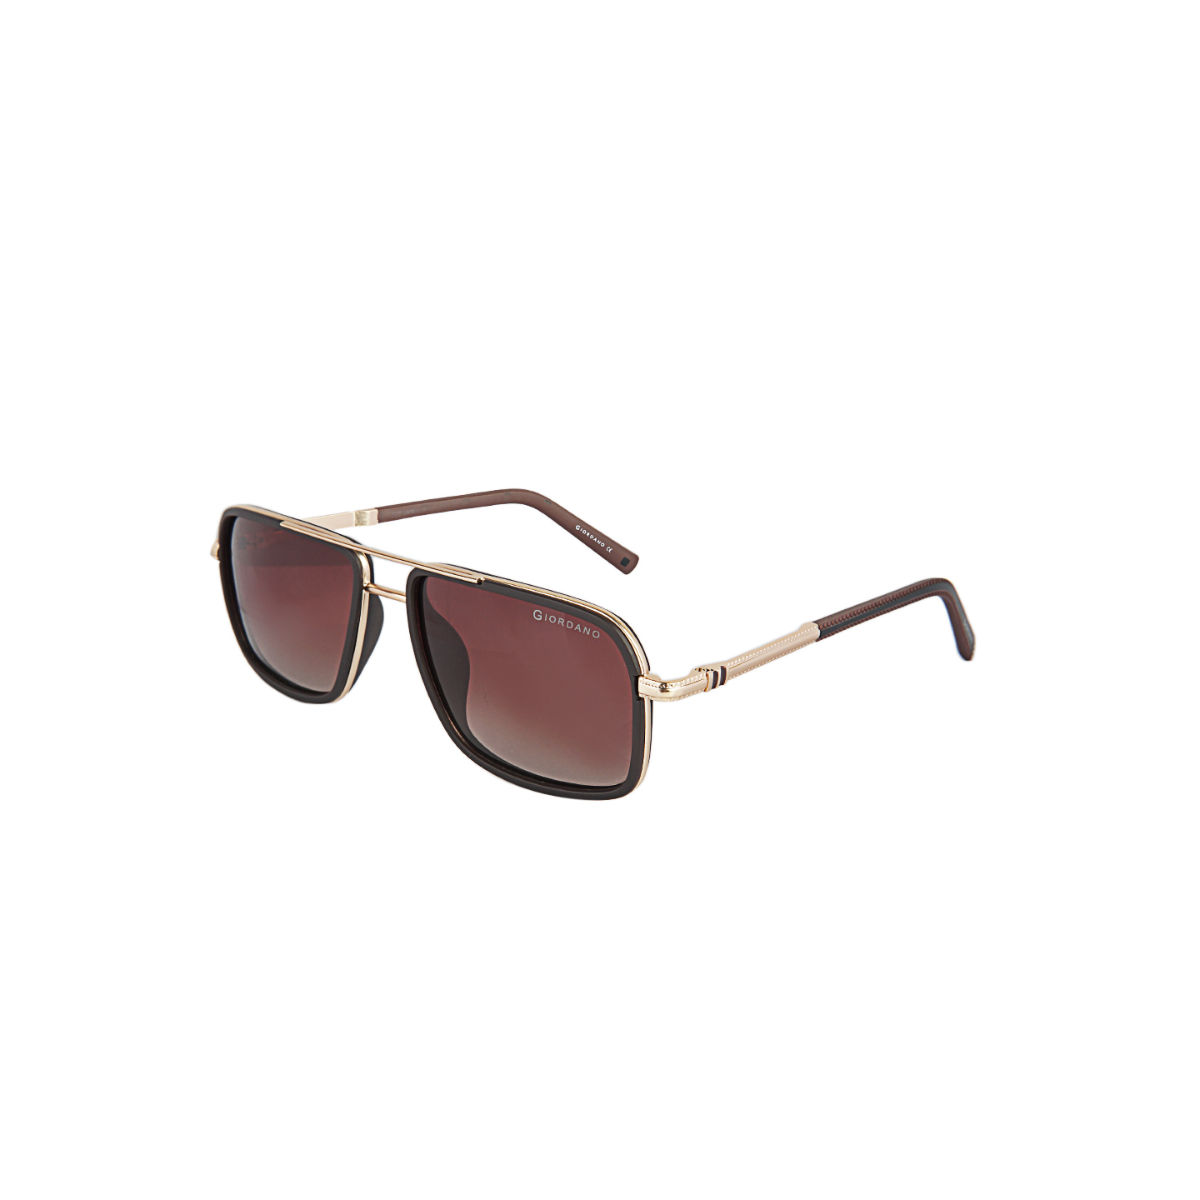 Giordano Clear Oval Sunglasses for Men